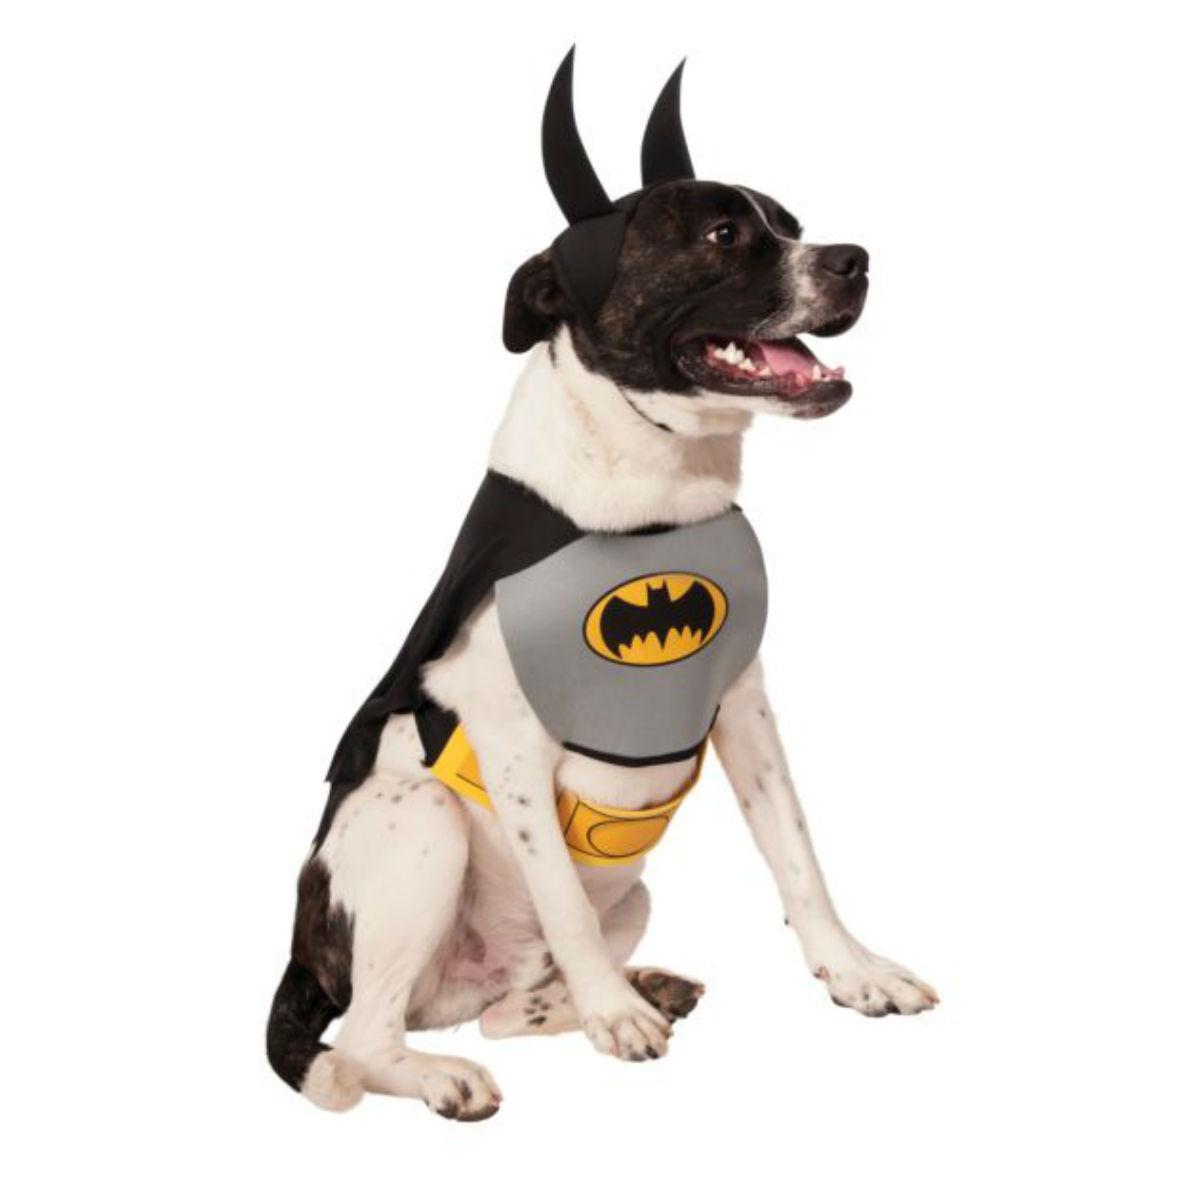 Classic Batman Dog Halloween Costume - Gray